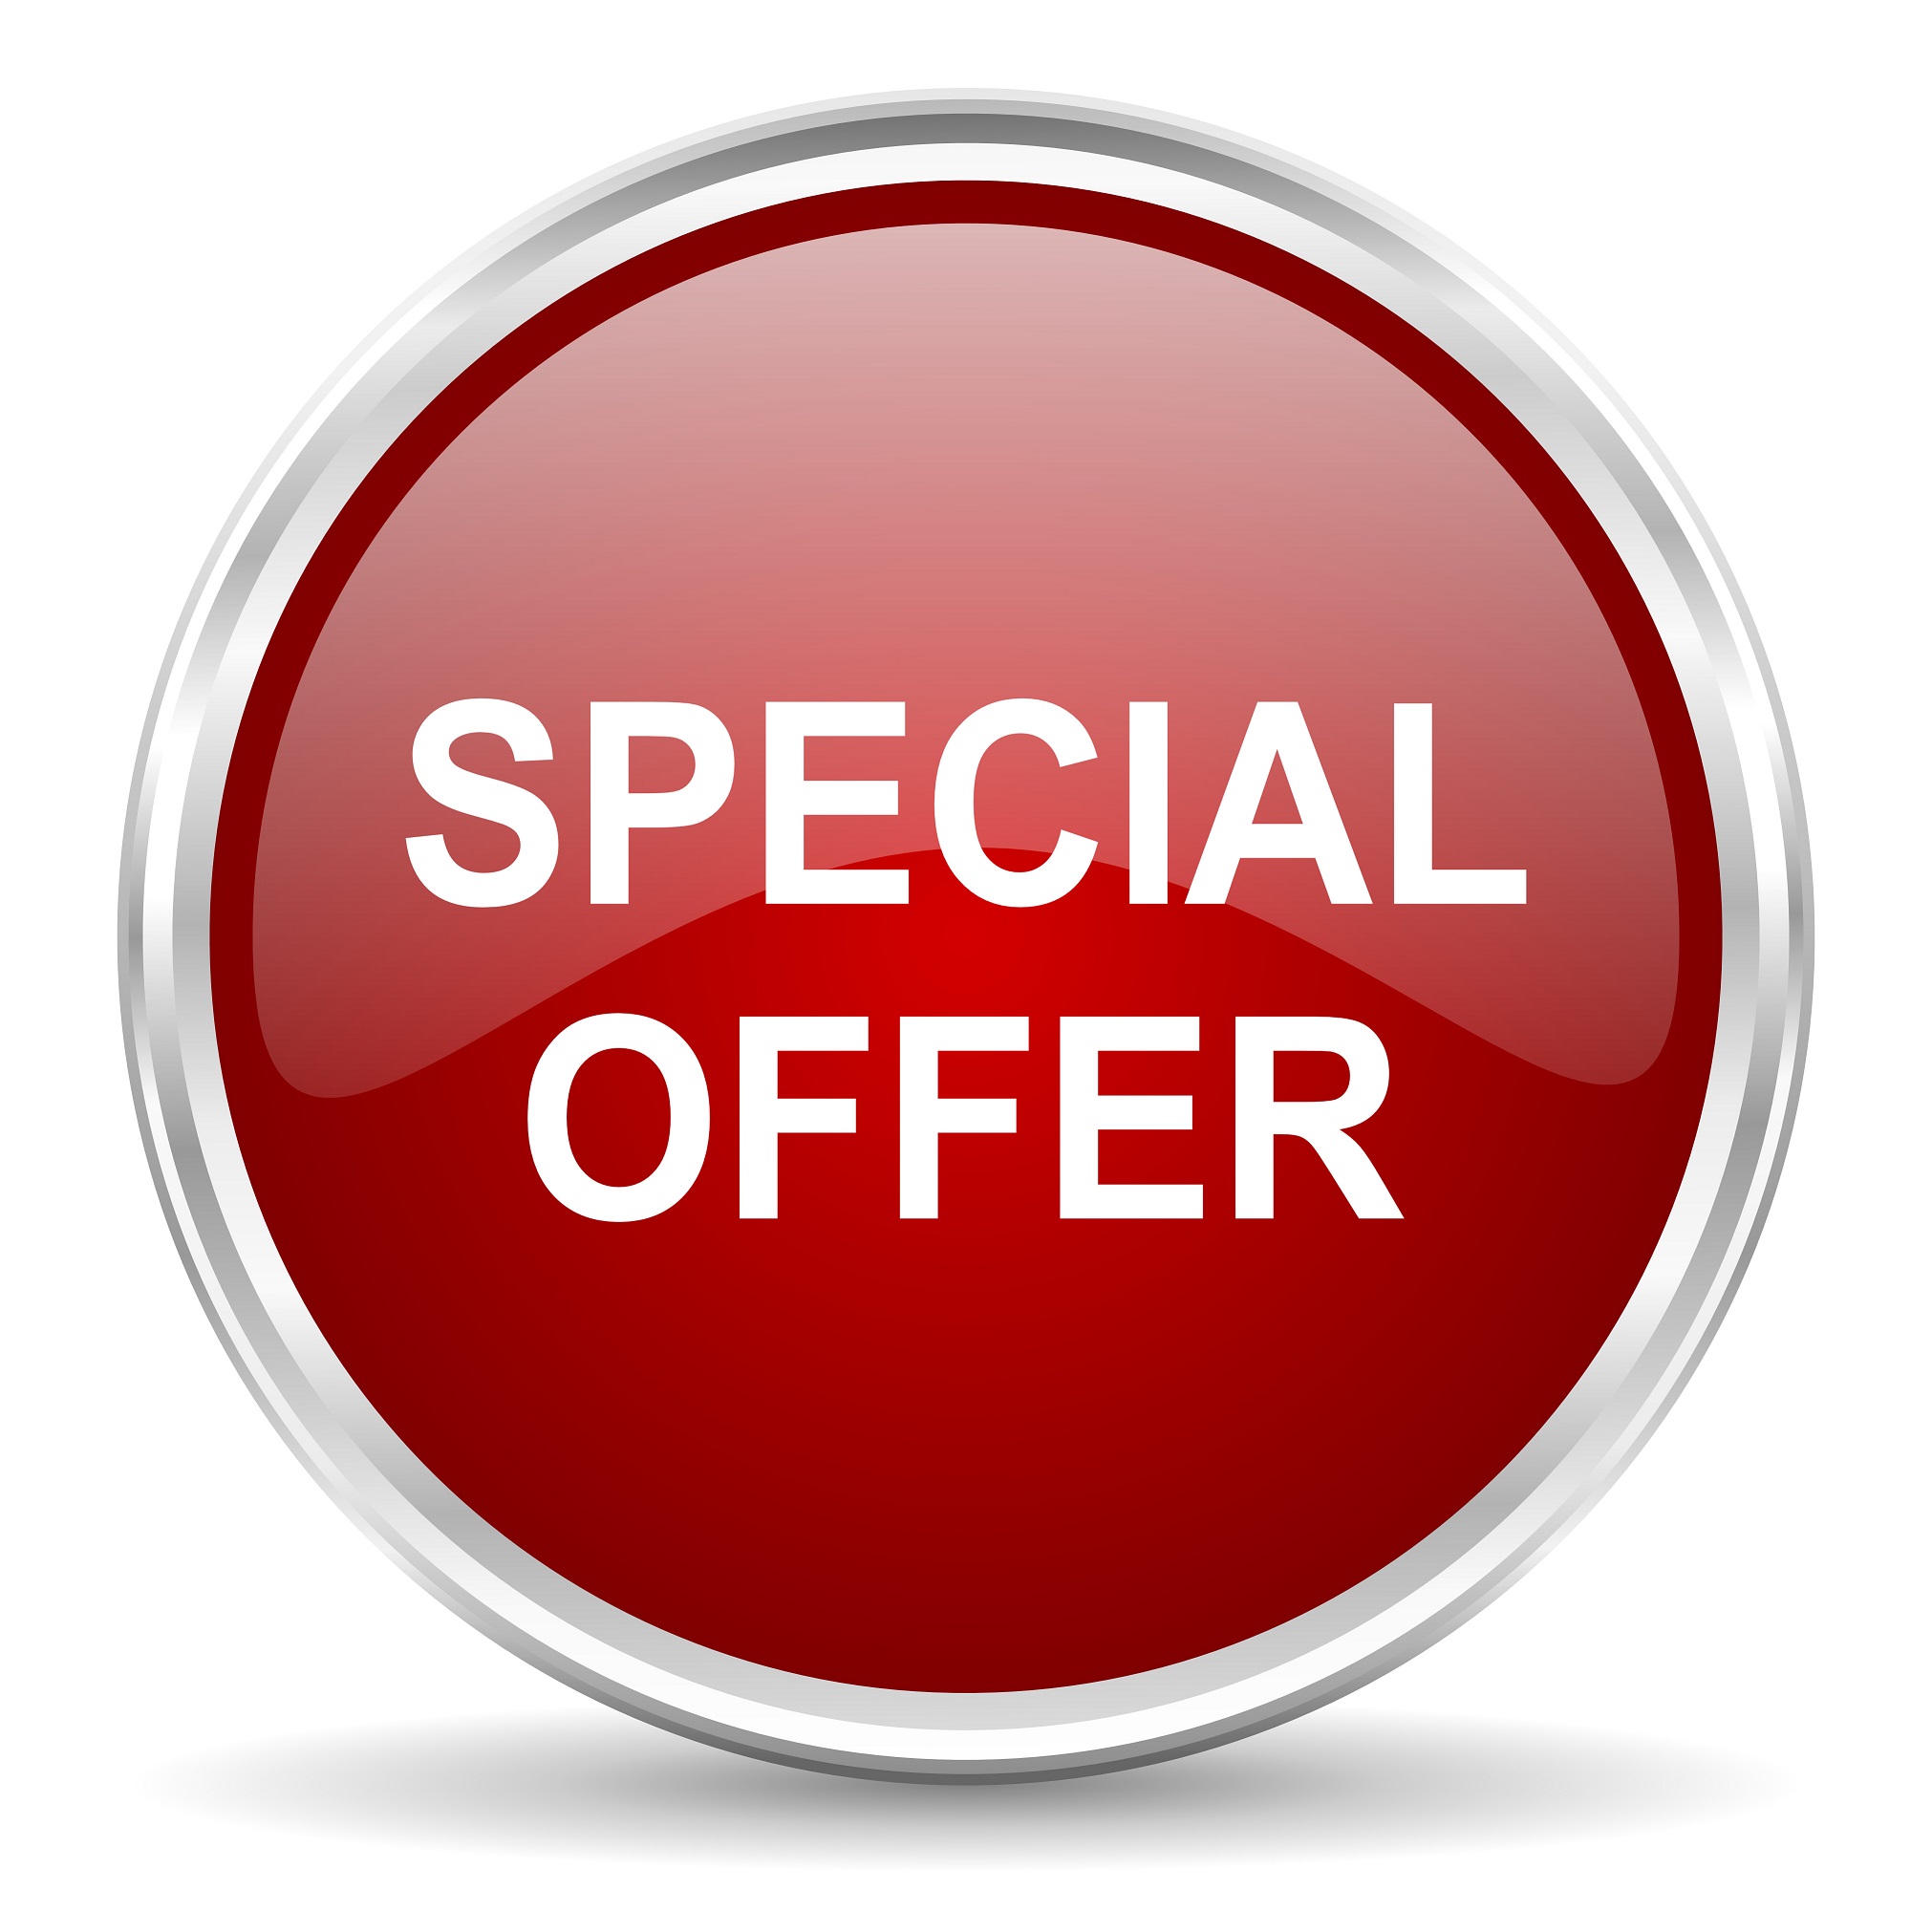 Special offer roxy цена. Офферы картинки. Special offer иконка. Special offer картинка. Special offer картинка для детей.